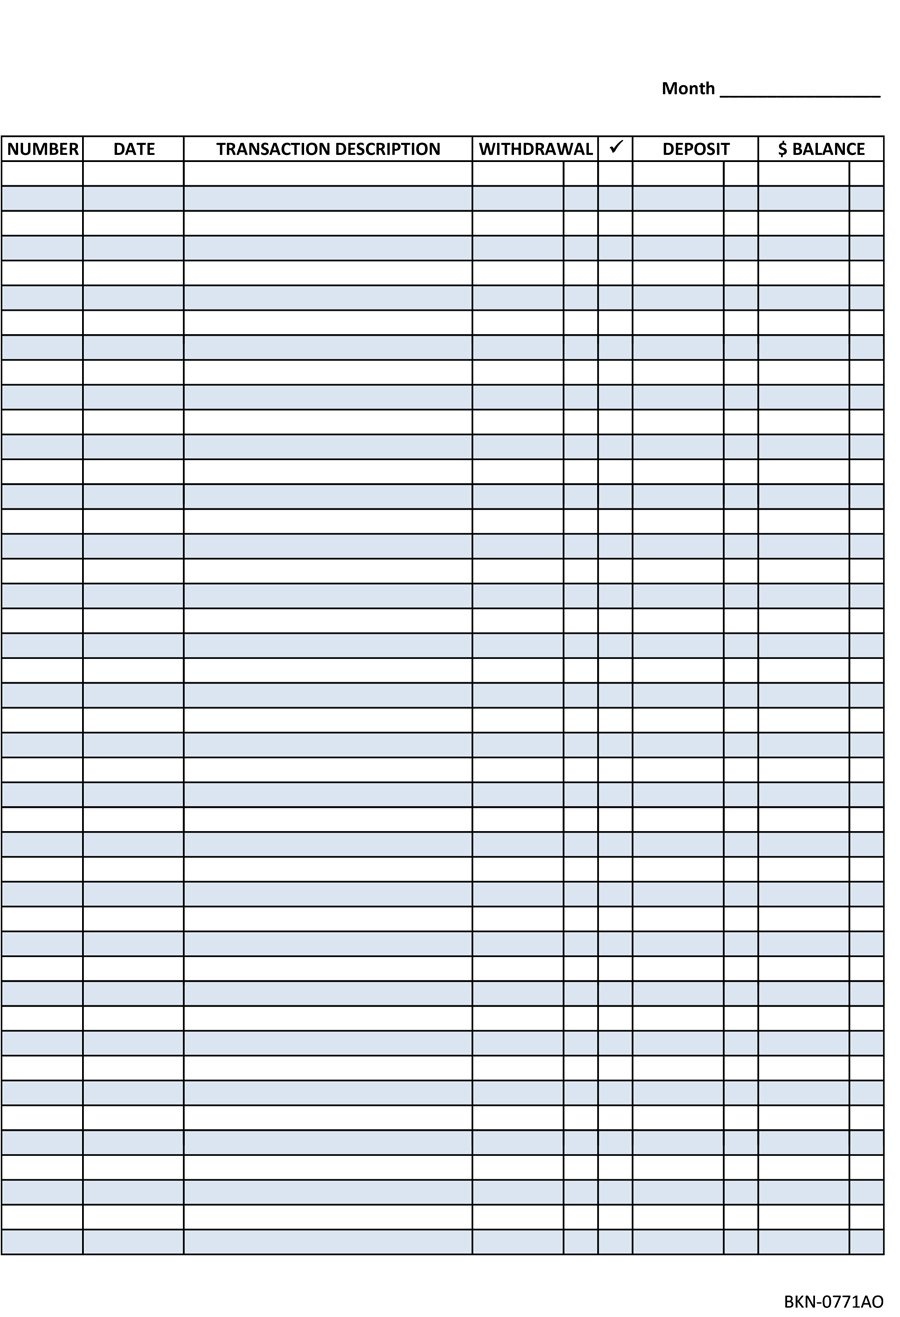 37 Checkbook Register Templates [100% Free, Printable] ᐅ Template Lab - Free Printable Check Register